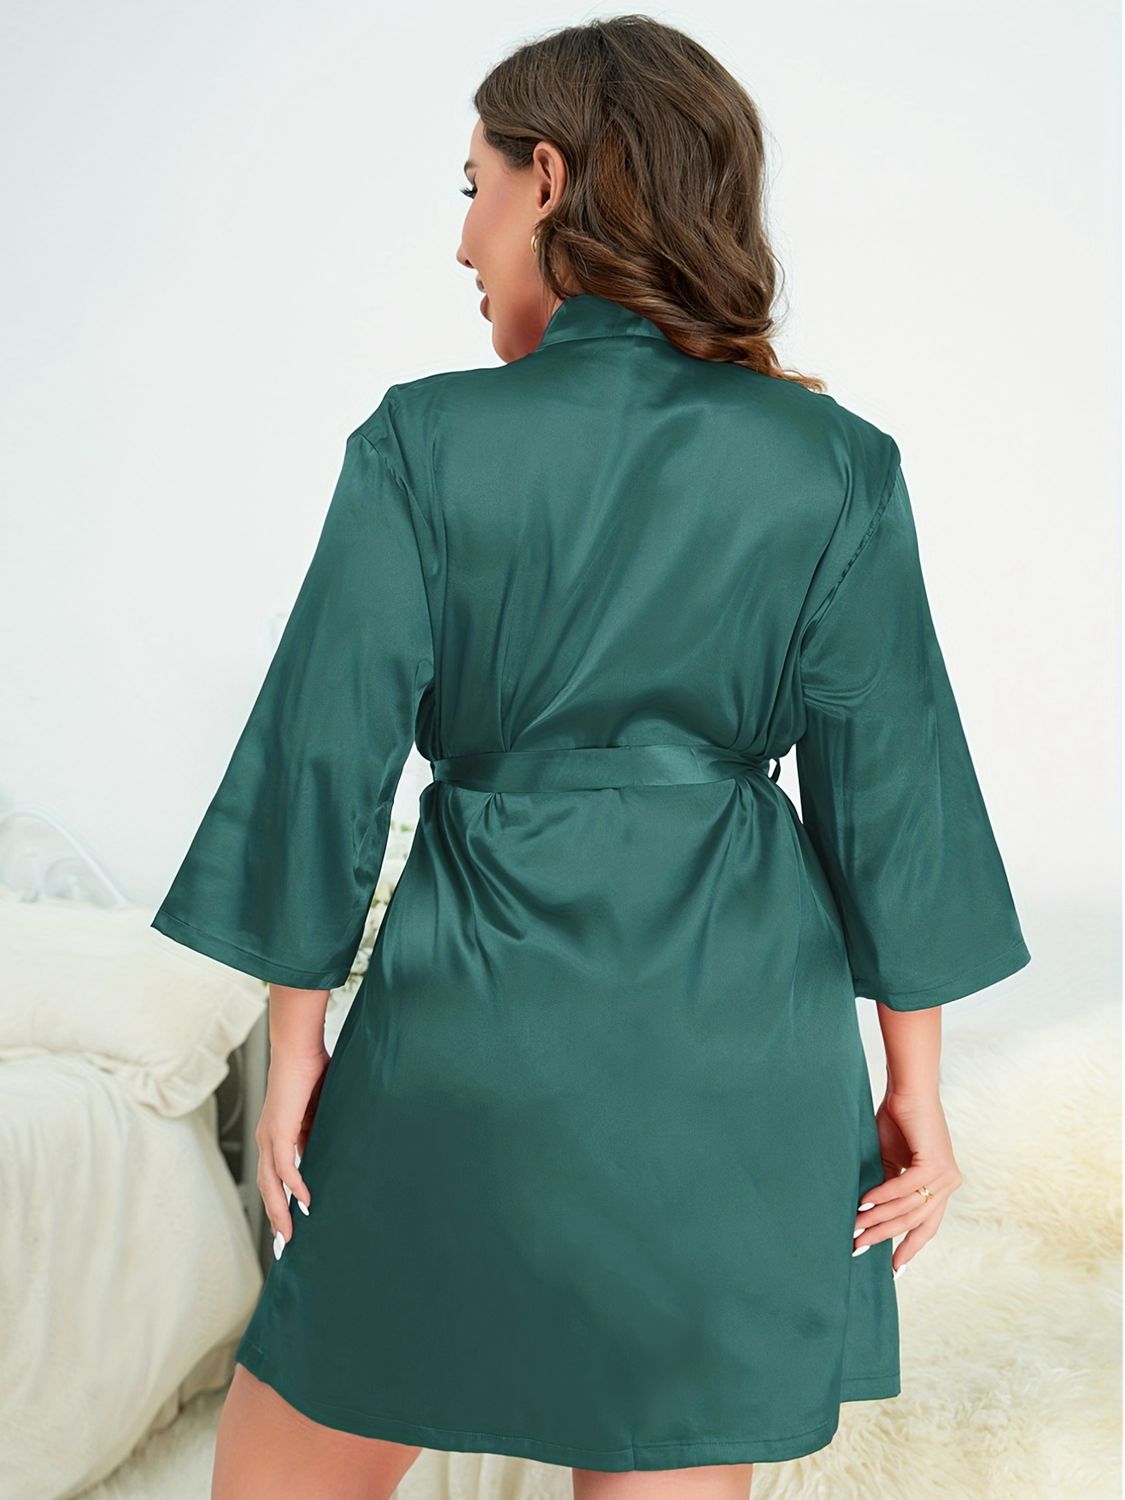 Back of model wearing green plus size robe